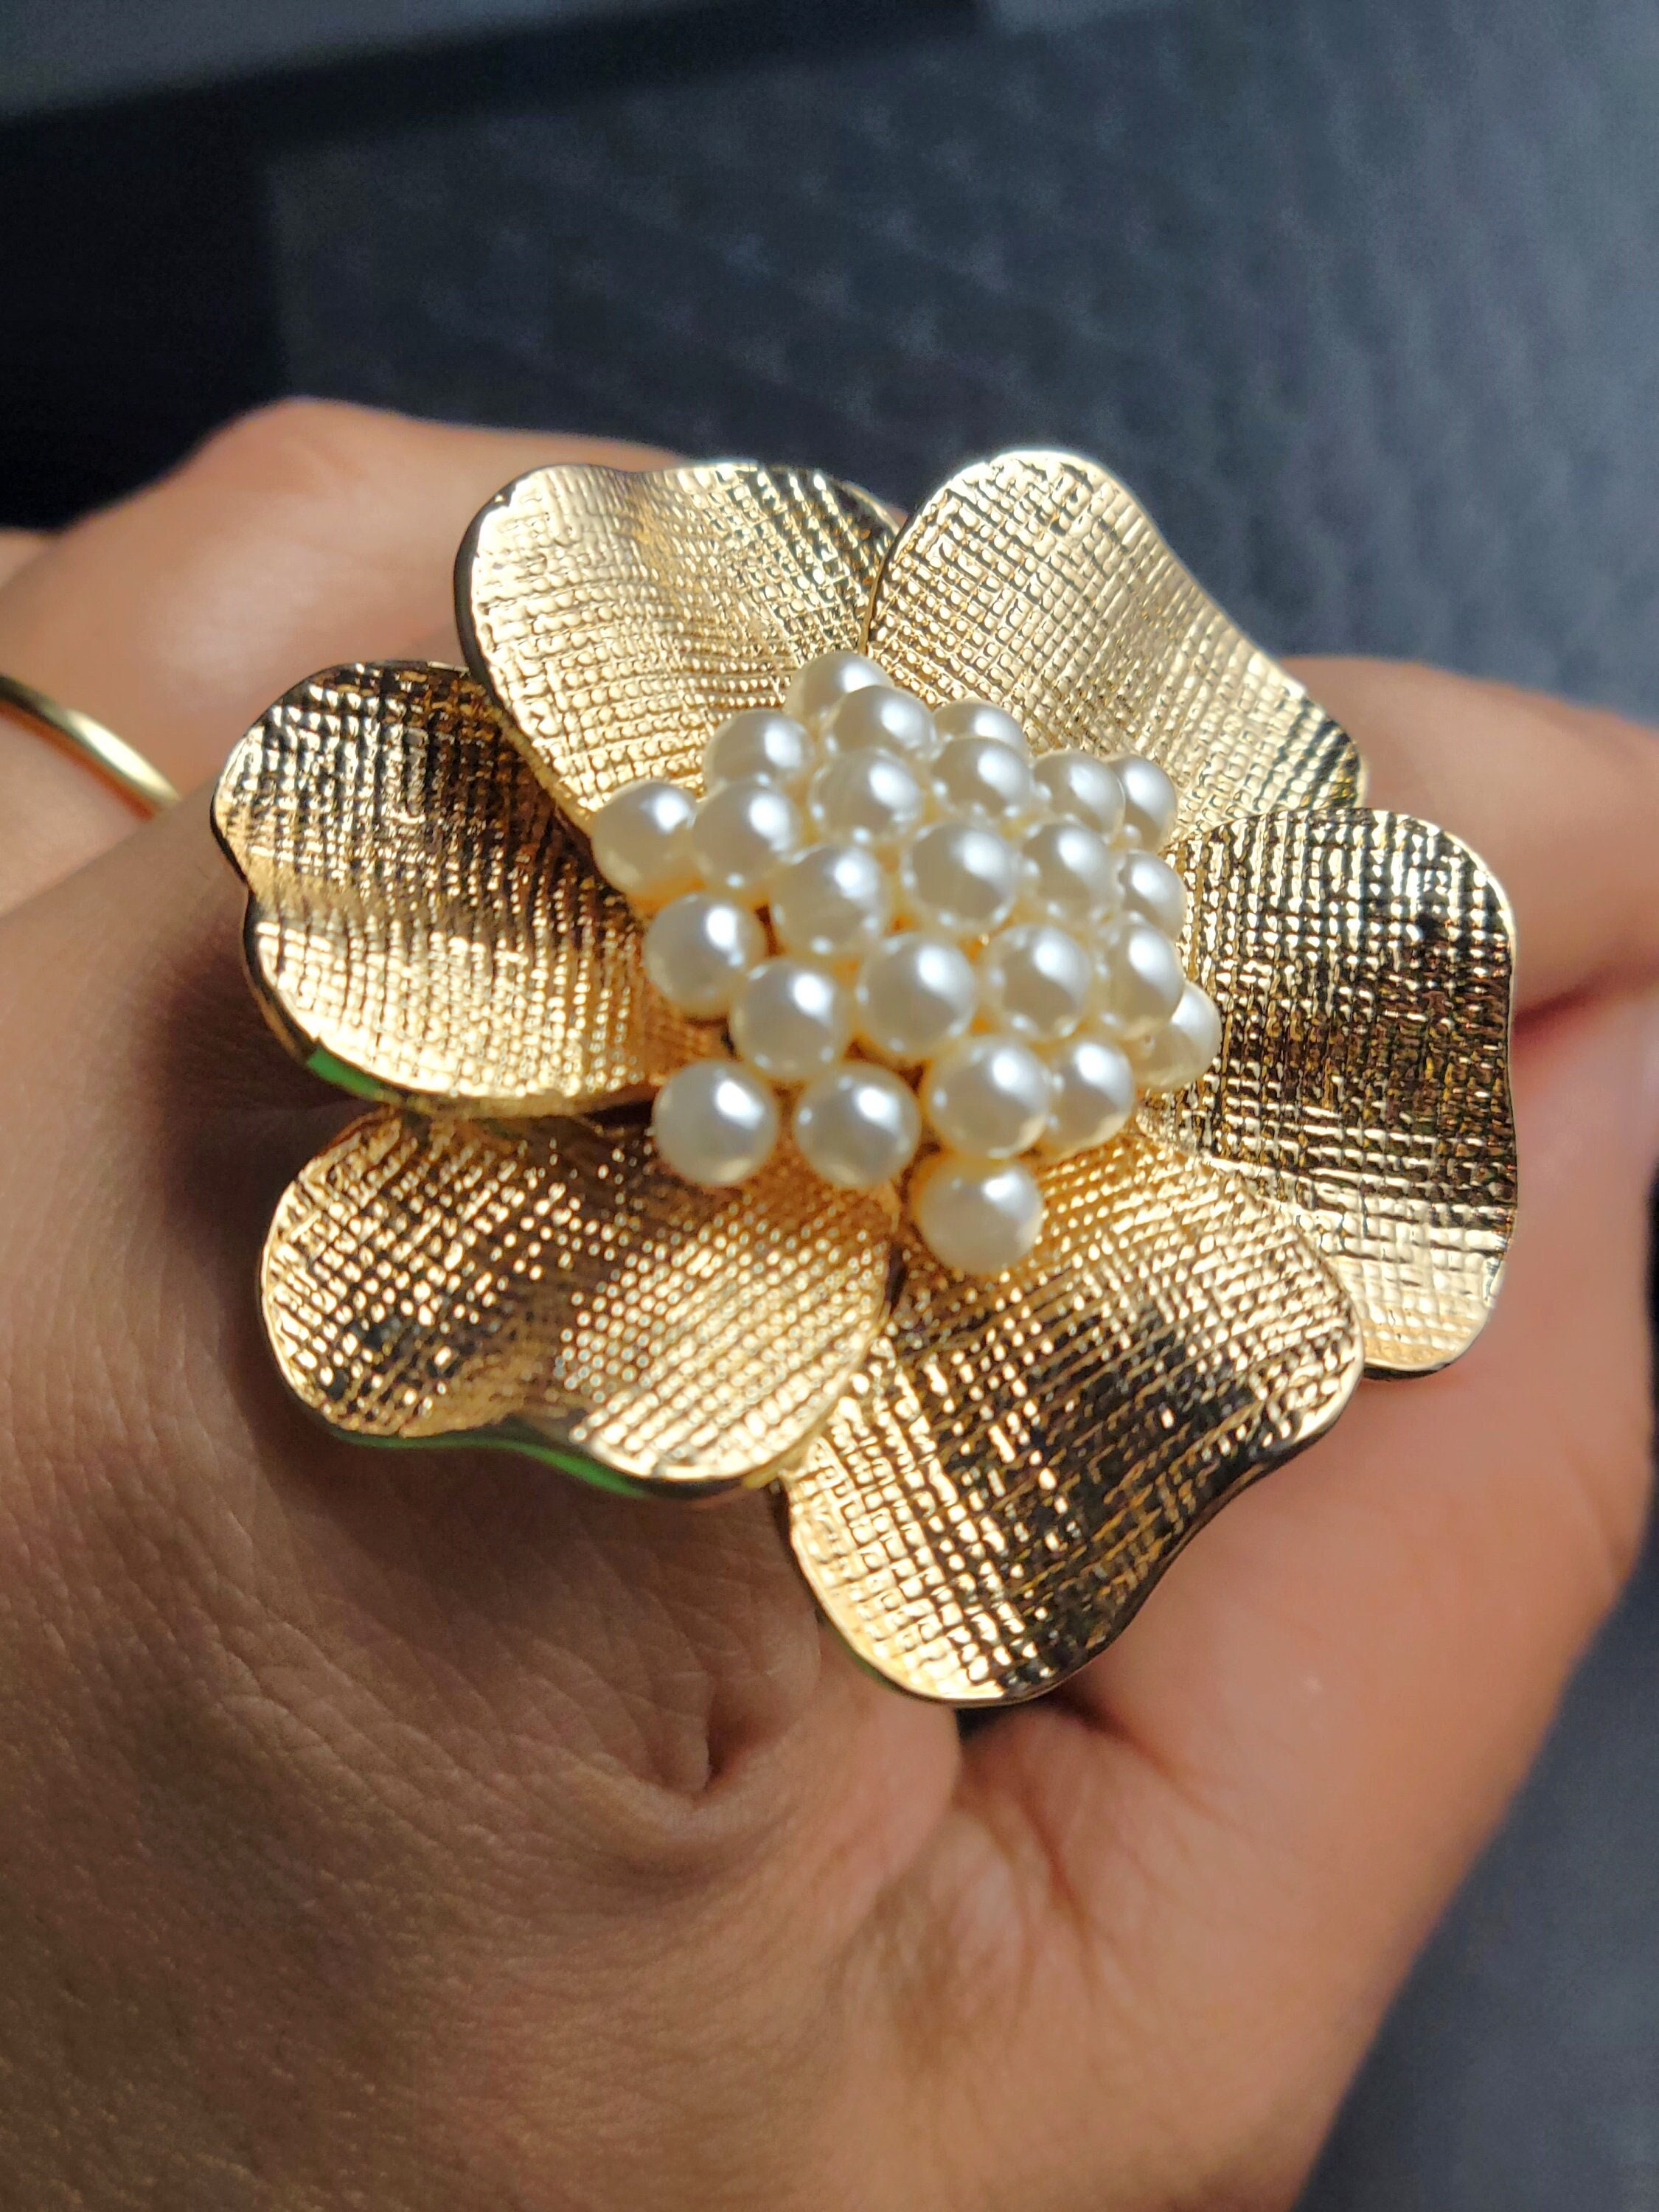 Gold Flower Ring Bridal Pearl Ring Adjustable Ring Large 